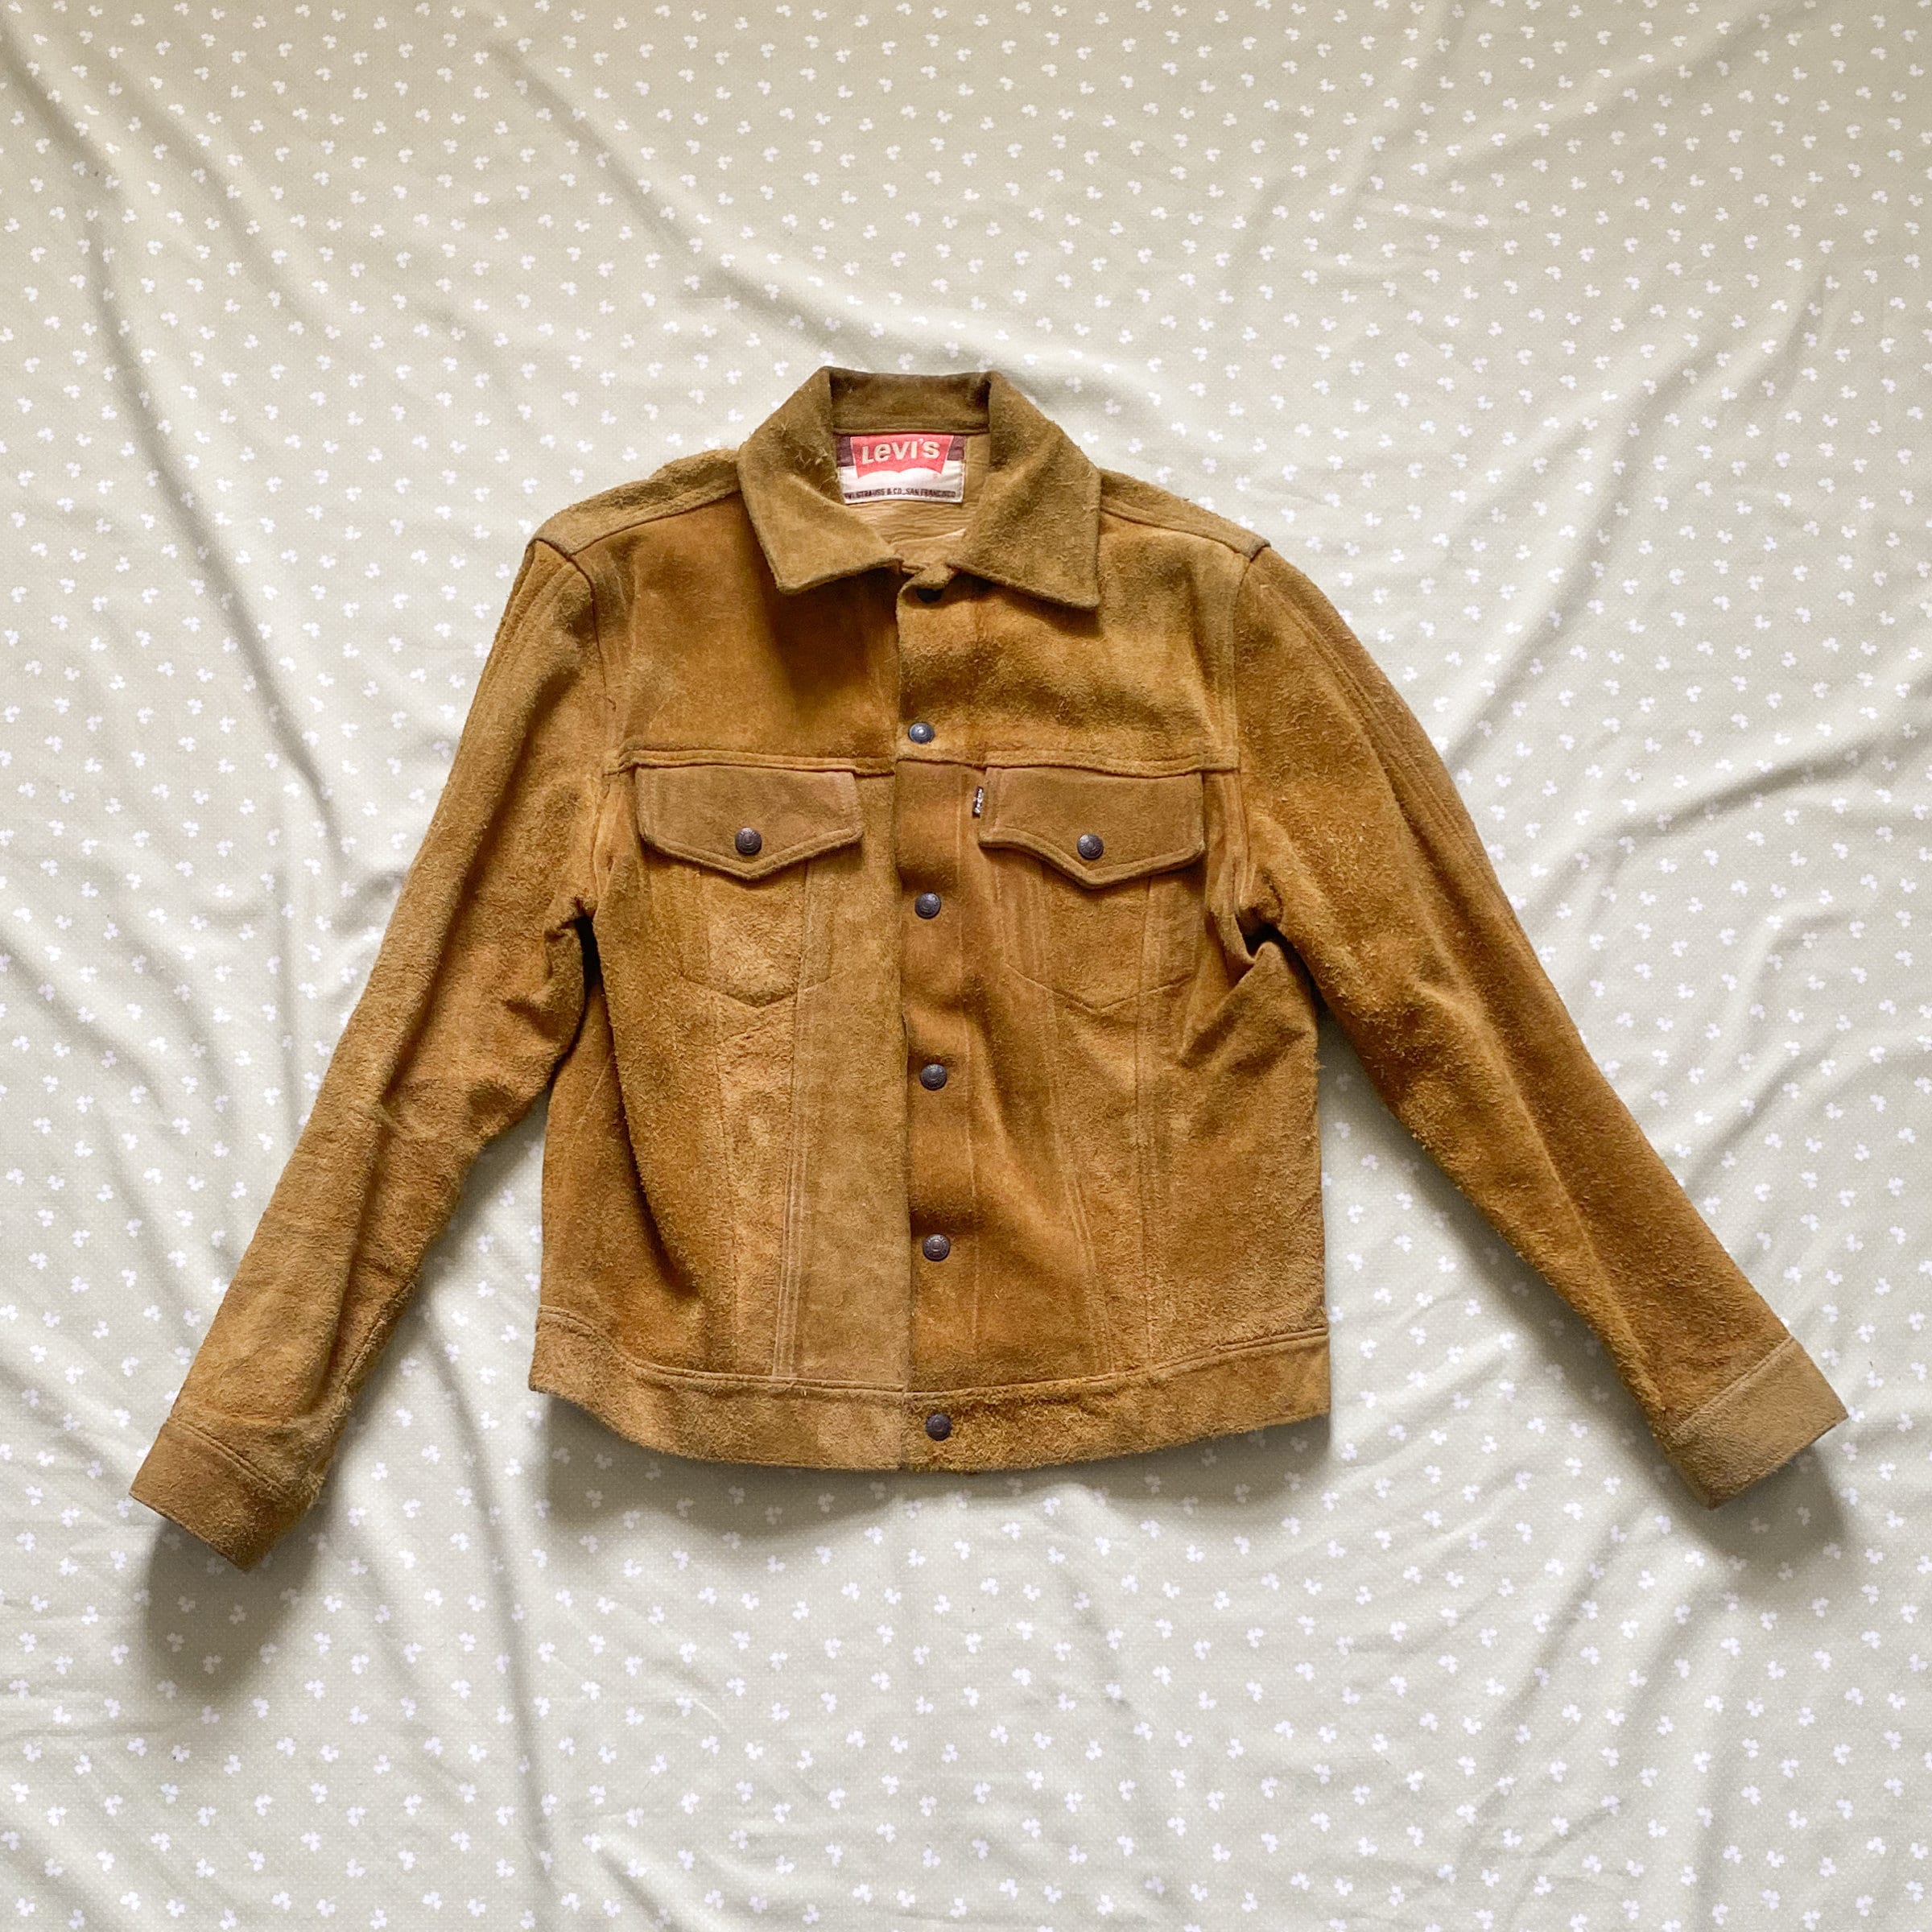 Supreme x Levi's Denim Coats, Jackets & Vests for Men for Sale